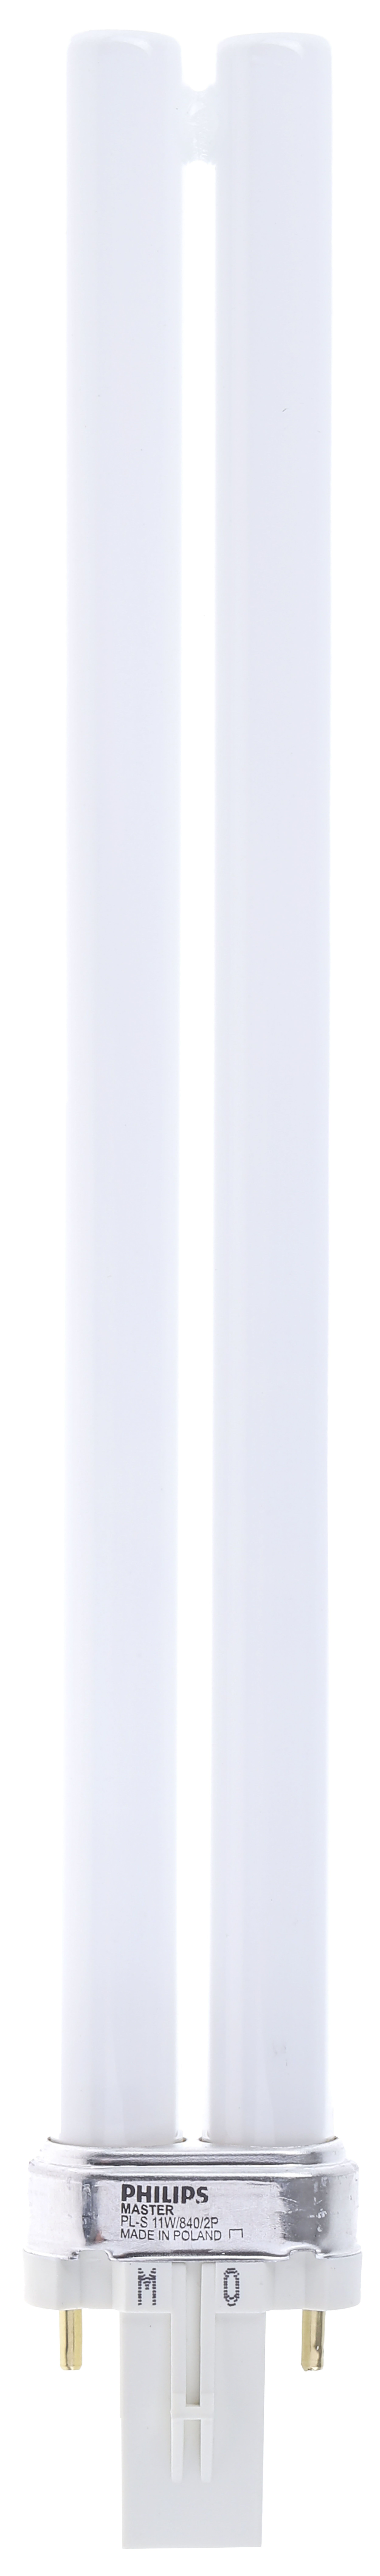 G23 Twin Tube Shape CFL Bulb, 11 W, 4000K, Cool White Colour Tone